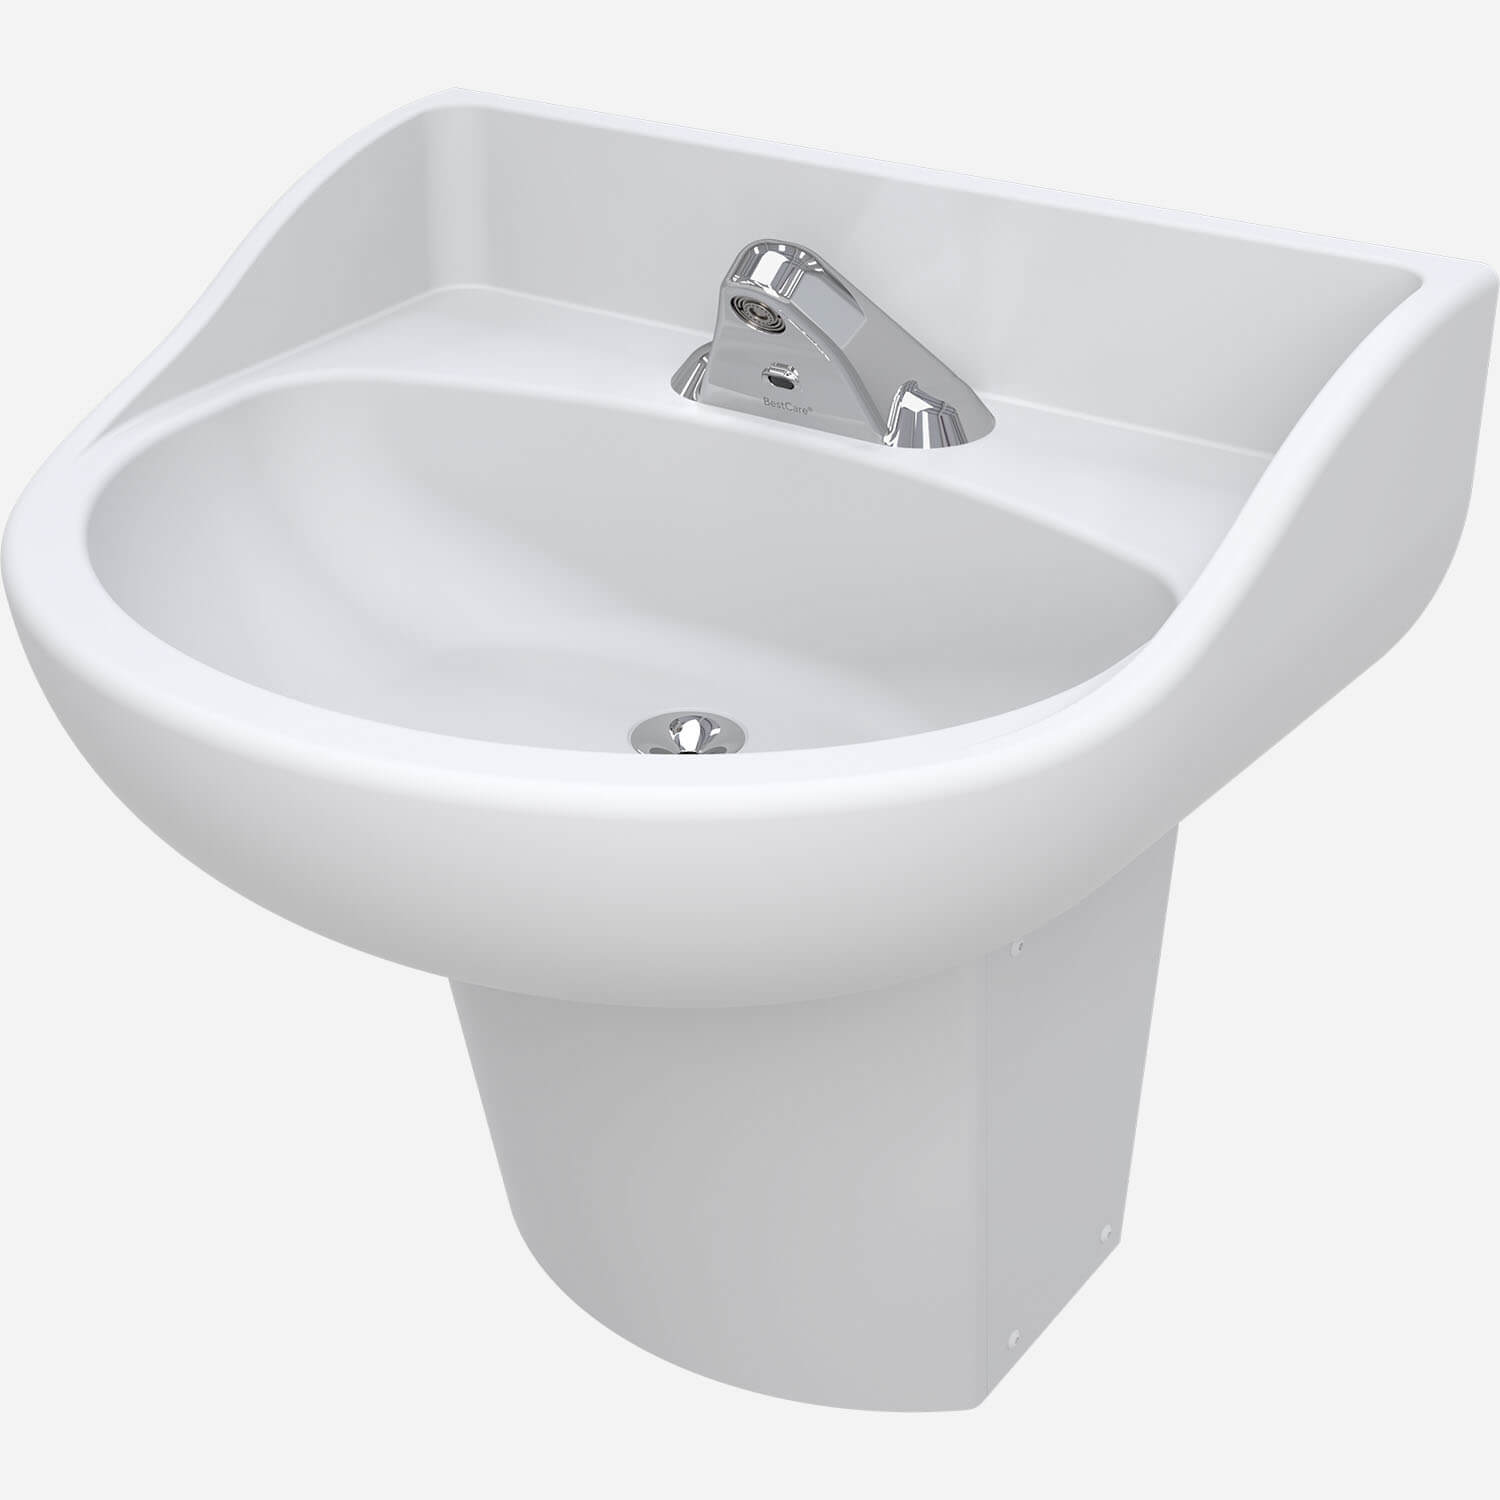 CoreGuard® Sink Base – Under Sink Protection